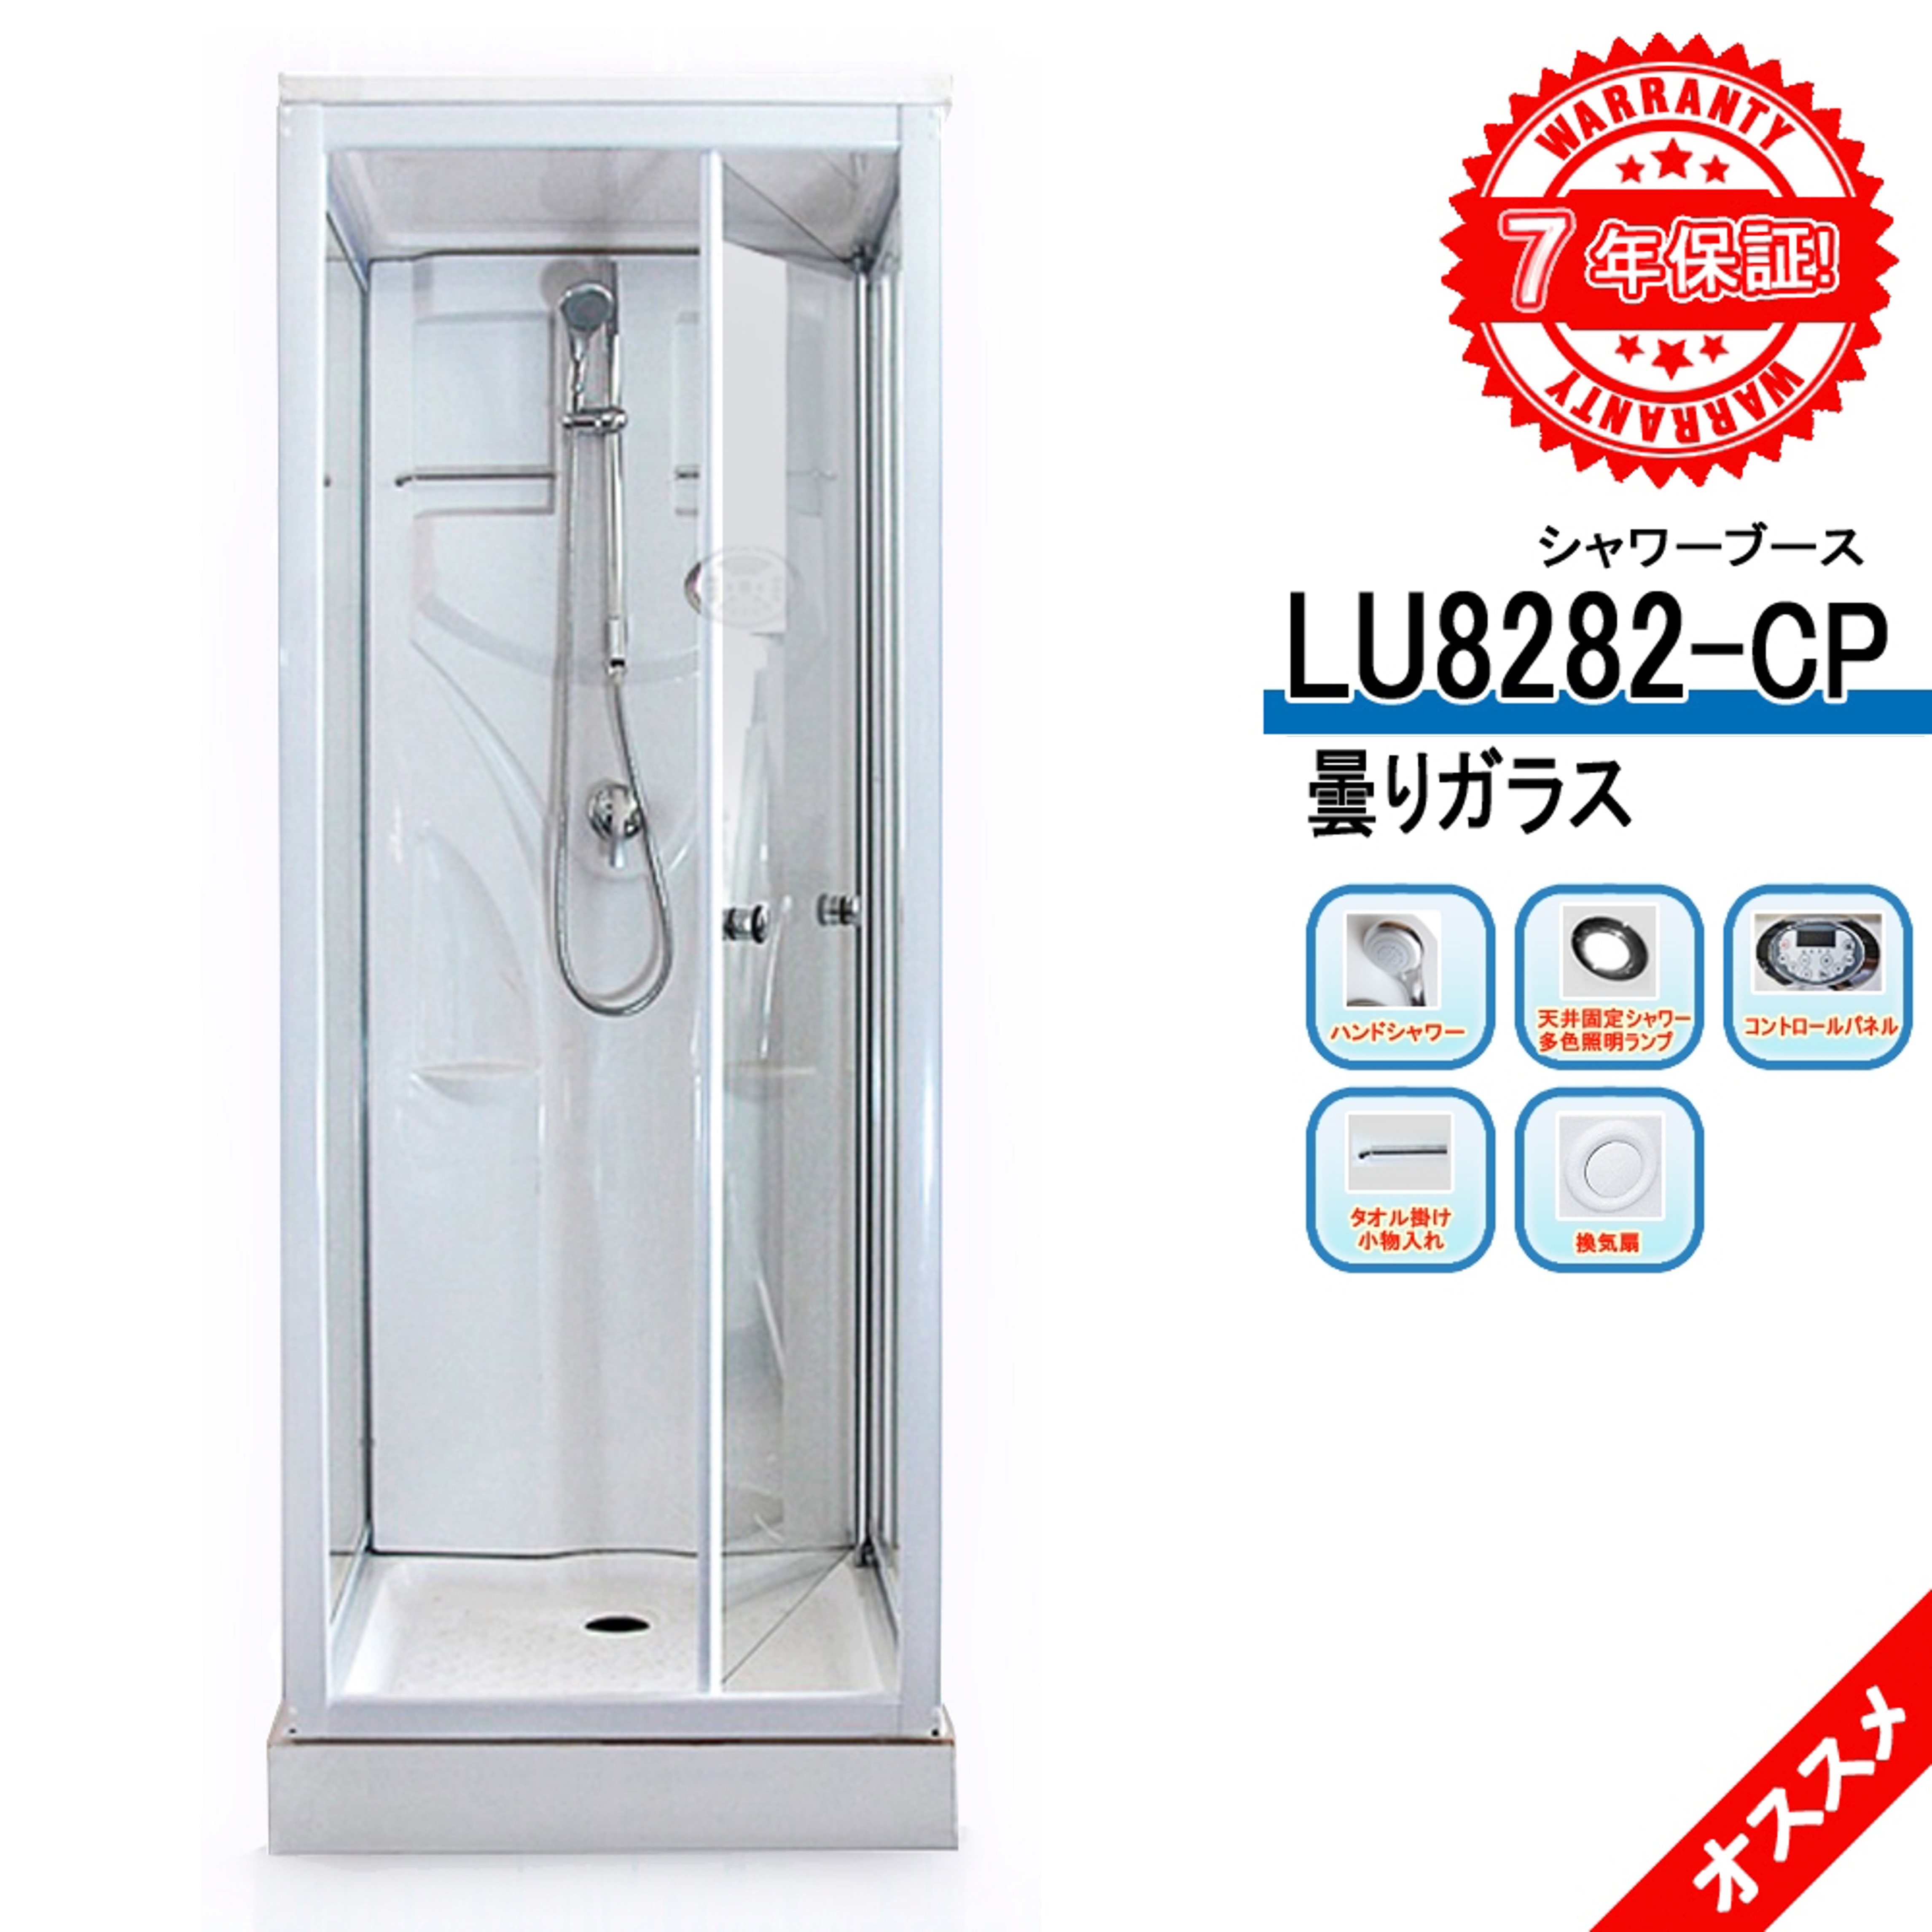 LU8282-CP・曇りガラス ・ 82x82x219h ・ シャワーブース、シャワー